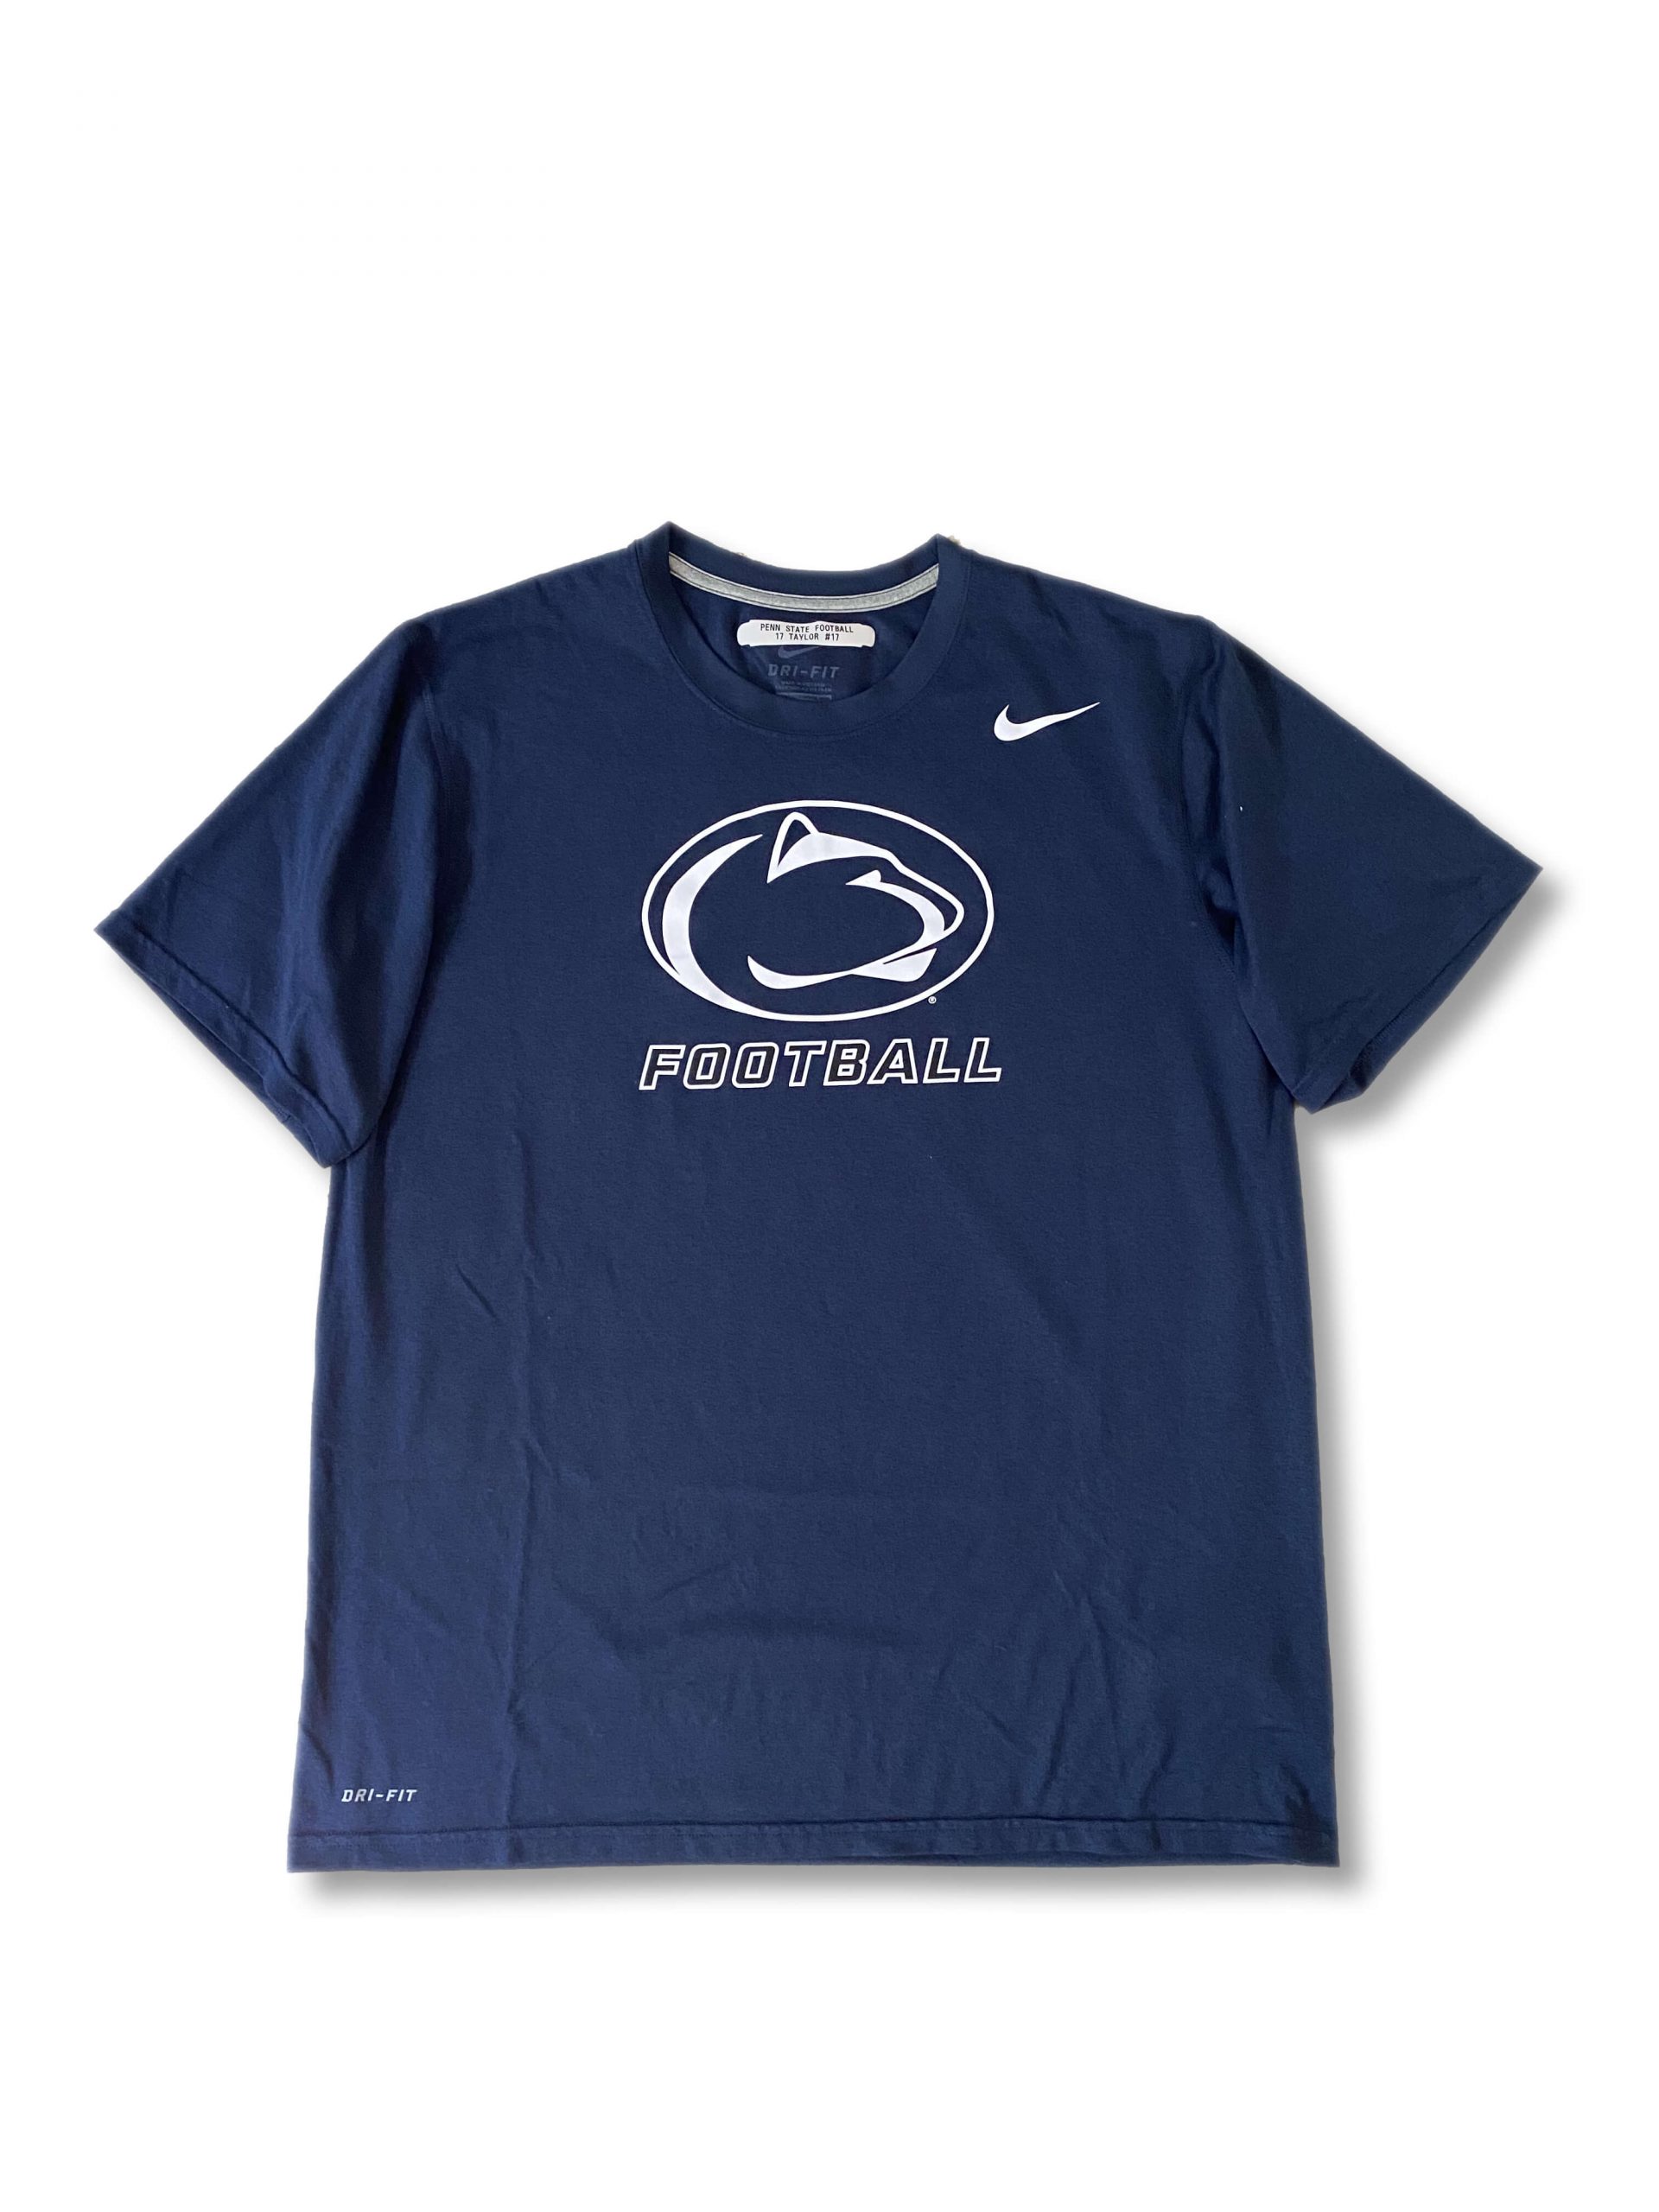 Penn State Football Dri-Fit Tee : NARP Clothing